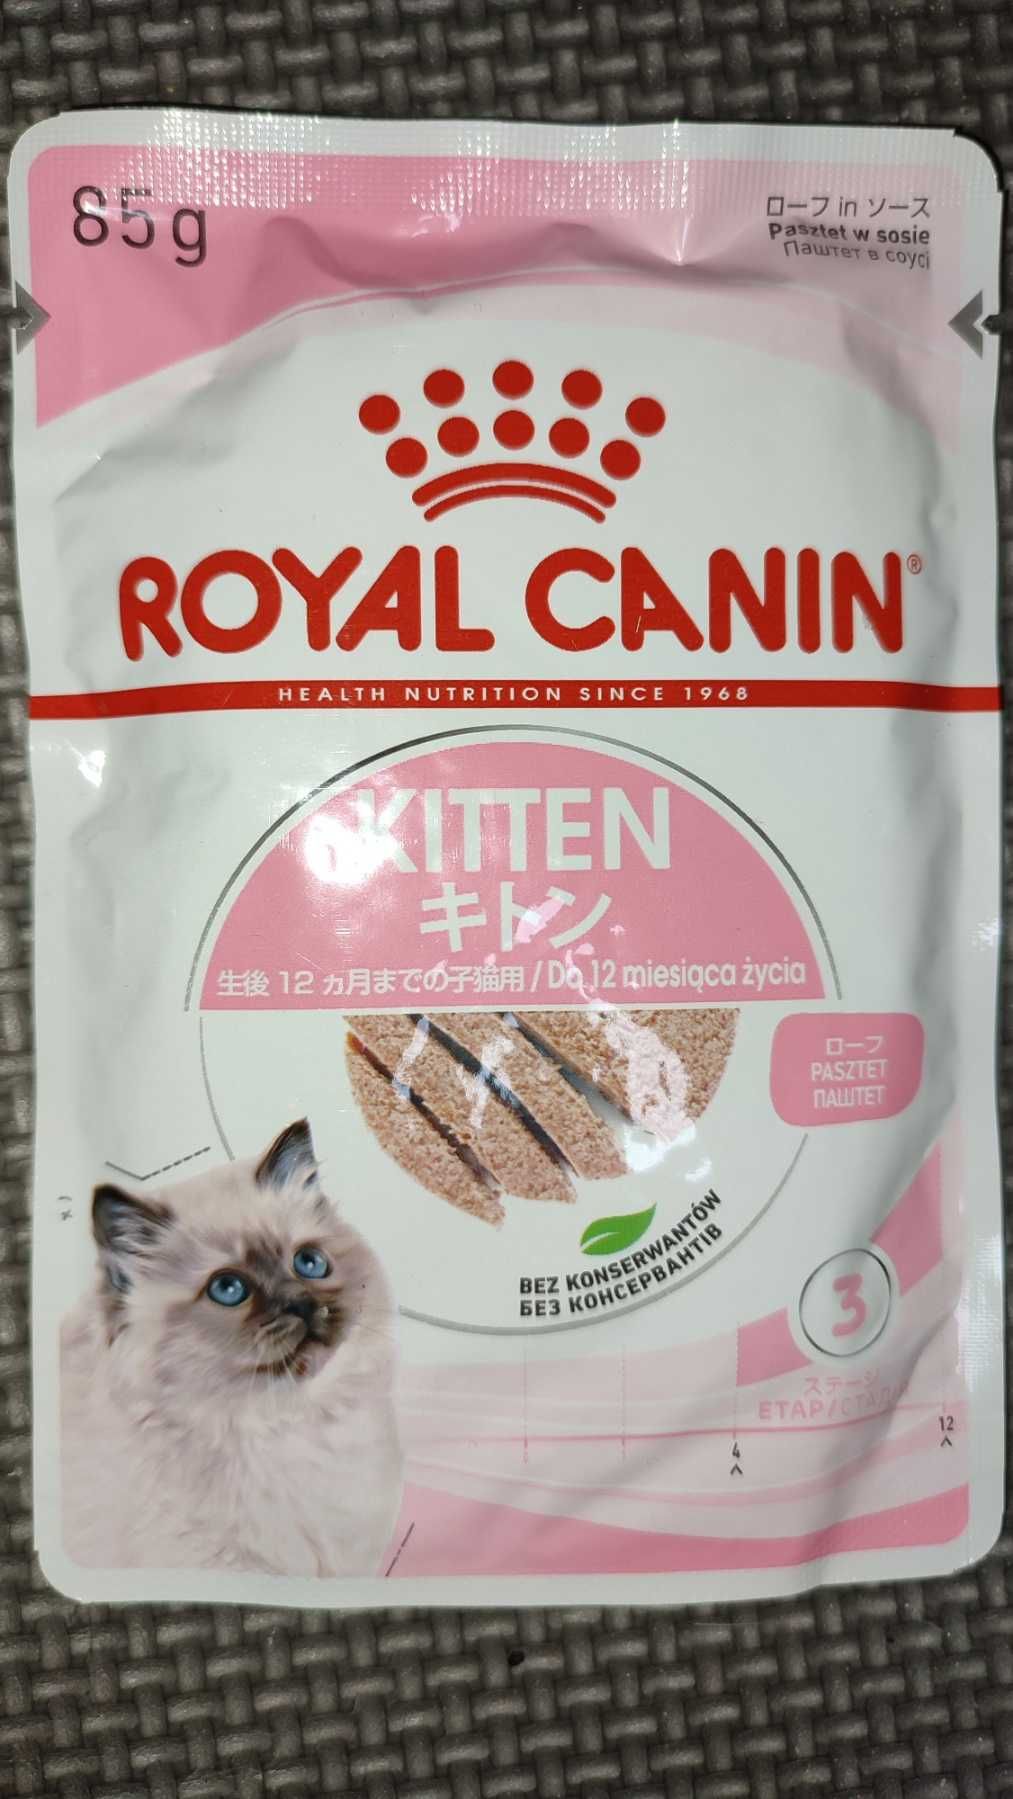 Royal Canin Kitten вологий корм для кошенят, паштет 12шт*85г